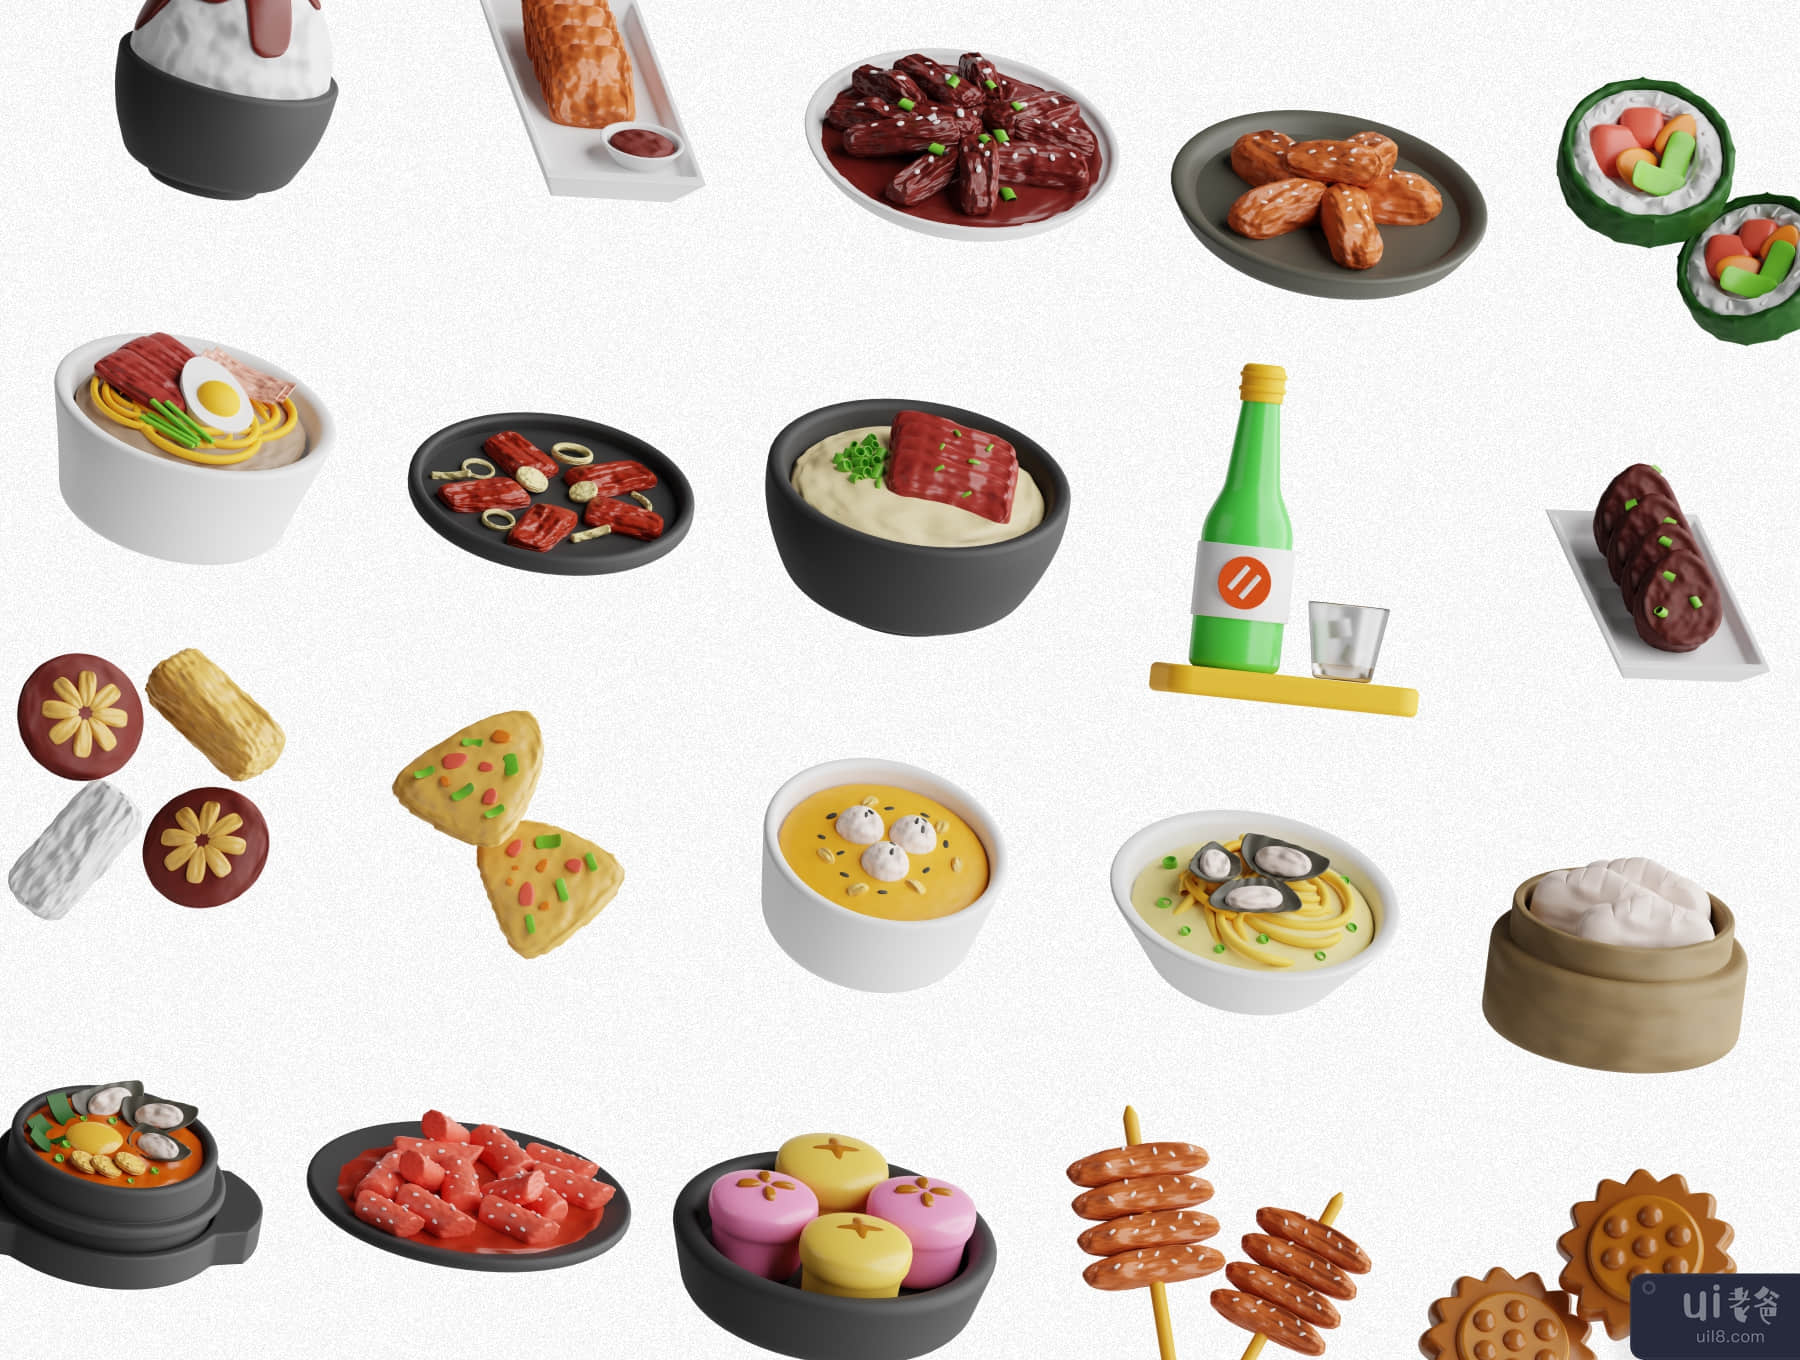 韩国食品 3D 图标集 (Korean Food 3D Icon Set)插图1